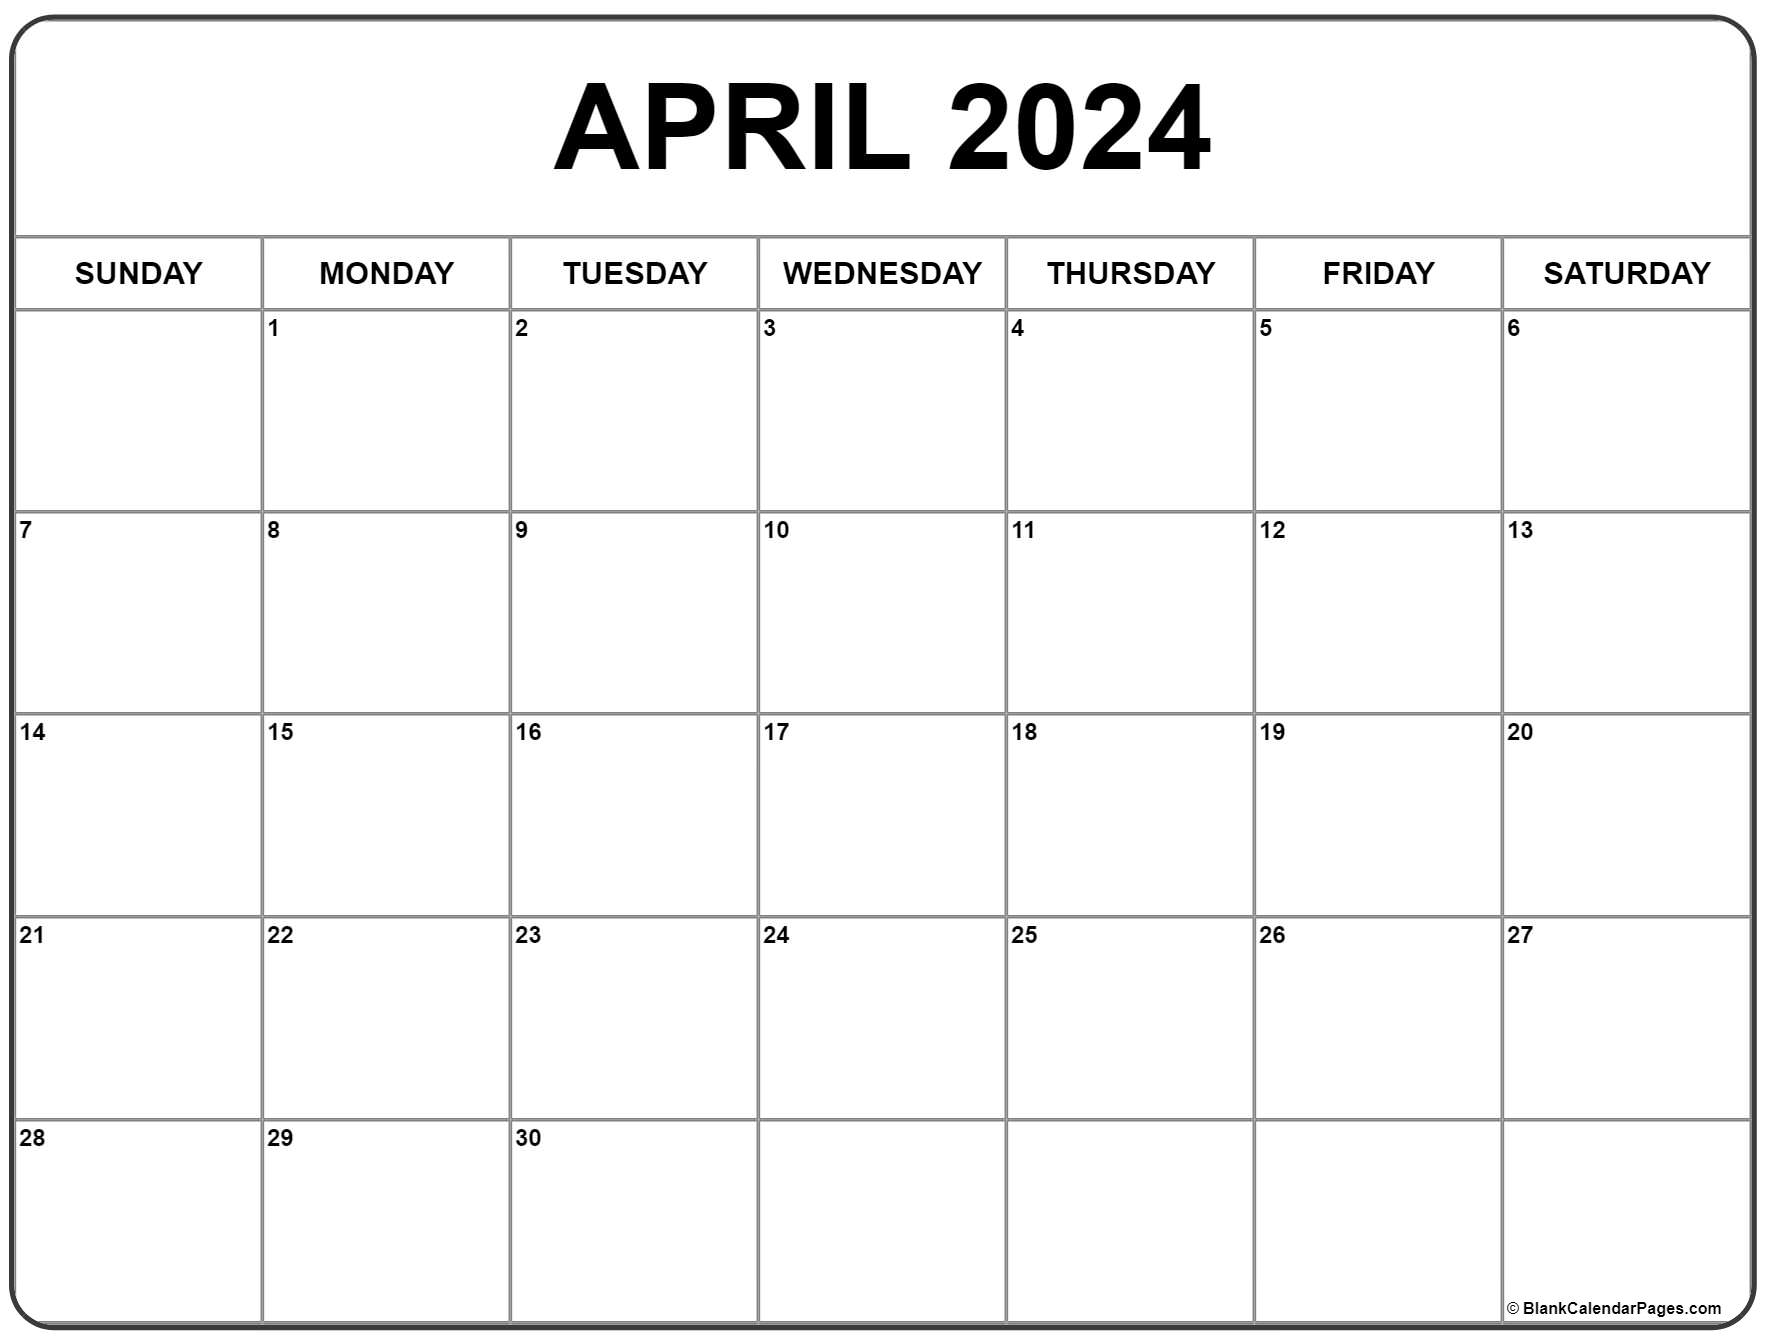 Print A Calendar April 2024 Calendar Tammi Fionnula